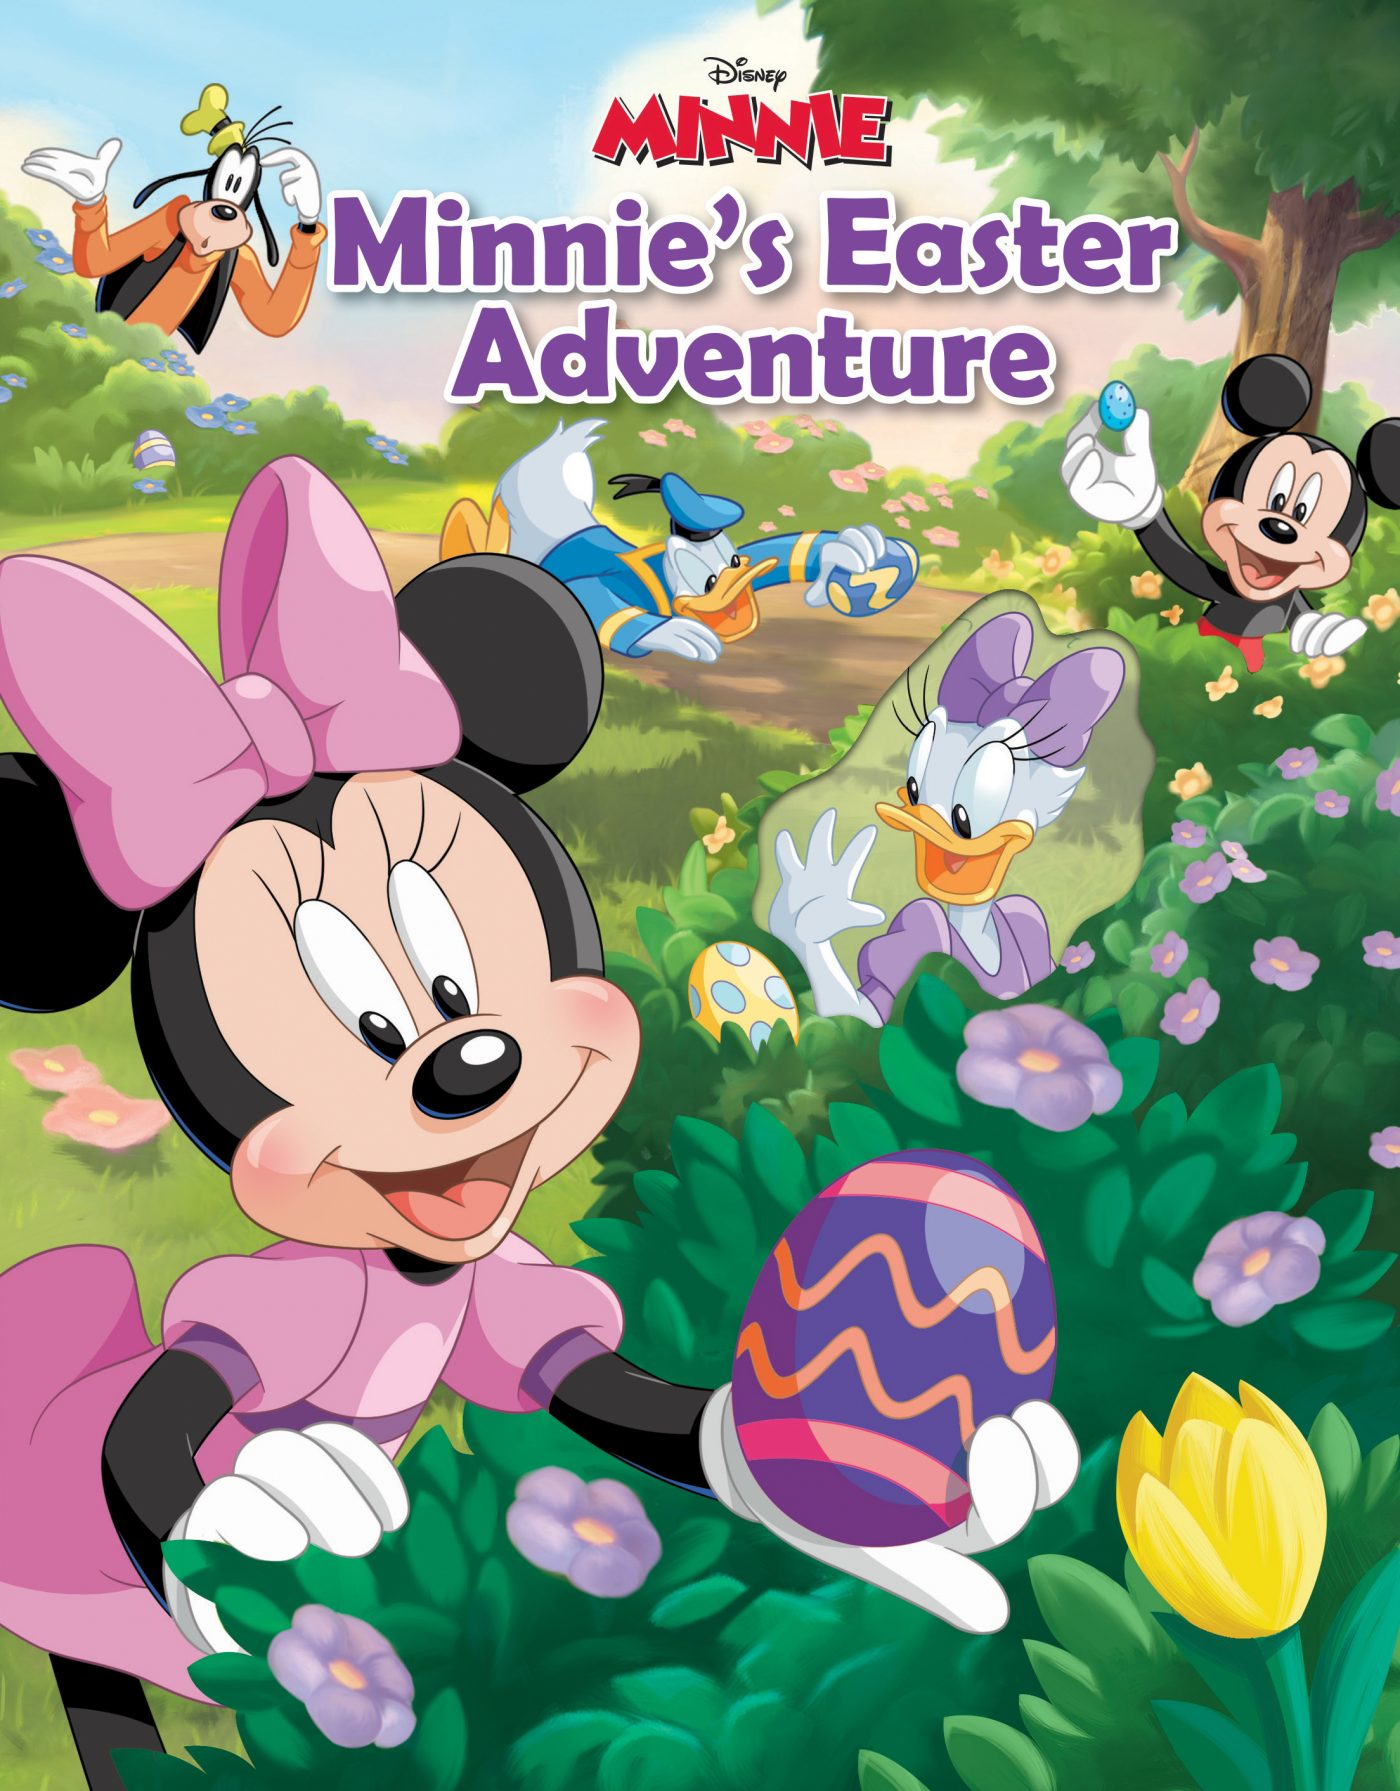 Disney Minnie's Easter Adventure